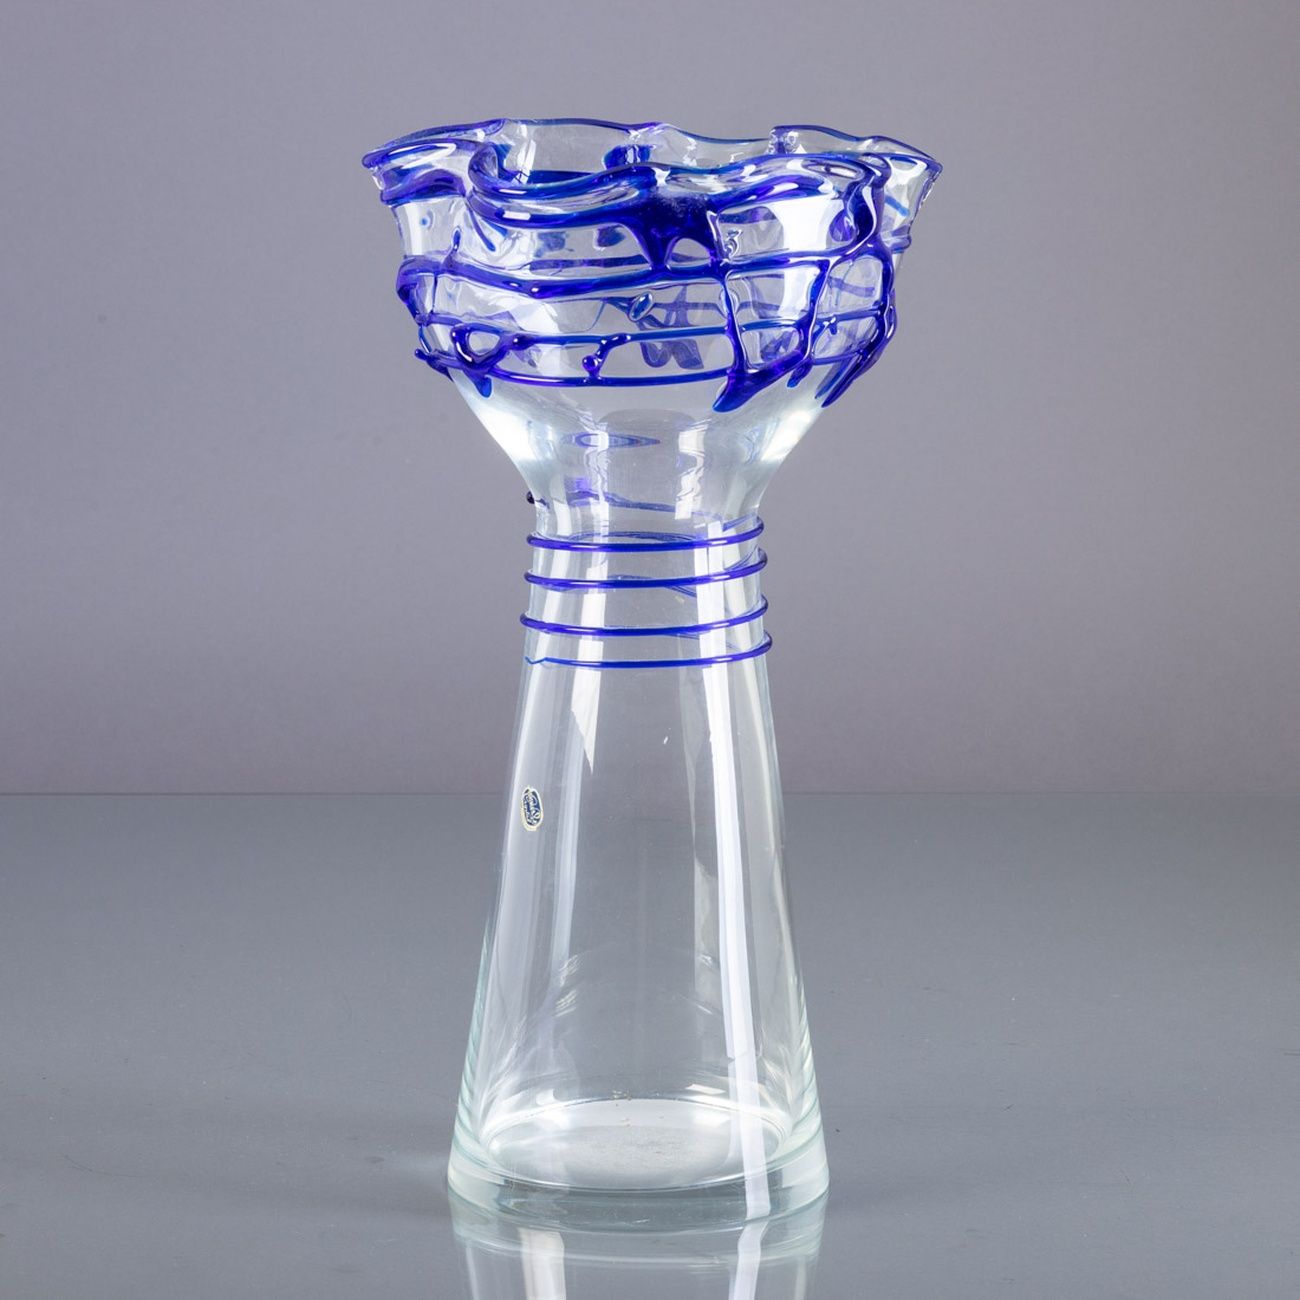 JARRA MODERNISTA 双色水晶的现代主义酒瓶，浮雕装饰。波西米亚人。使用的痕迹。

尺寸：41厘米。